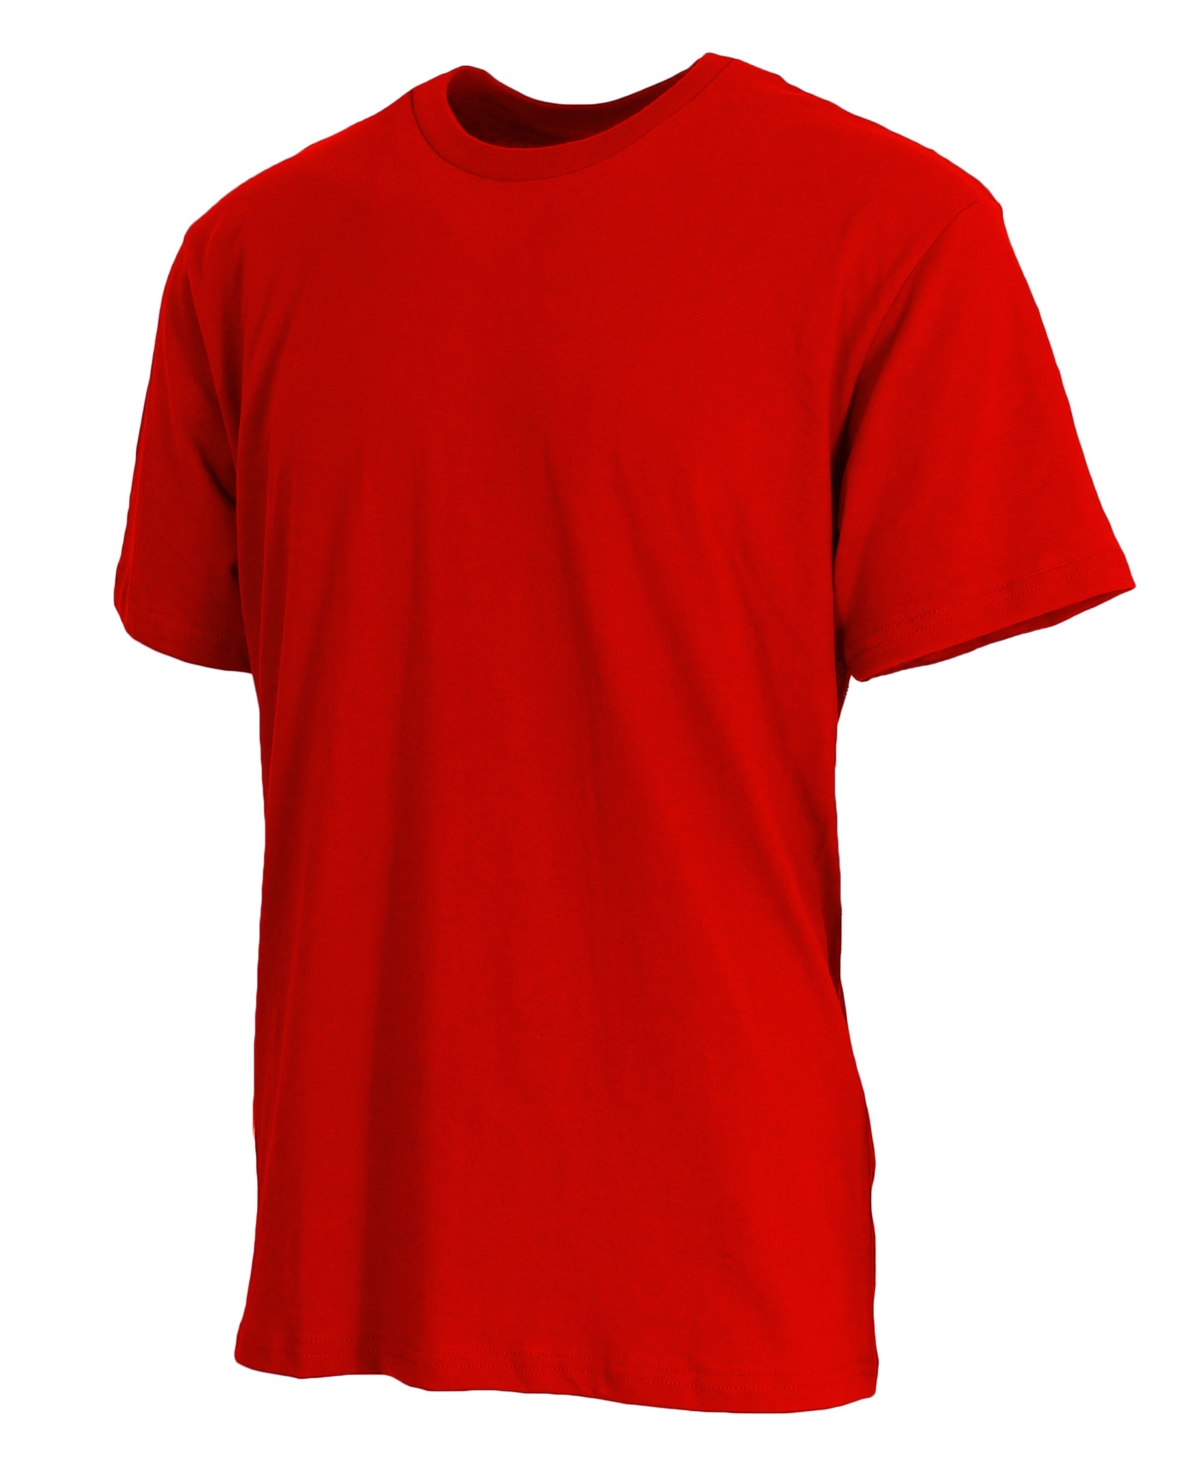 Men's Short Sleeve Crew Neck Classic T-shirt - Royal